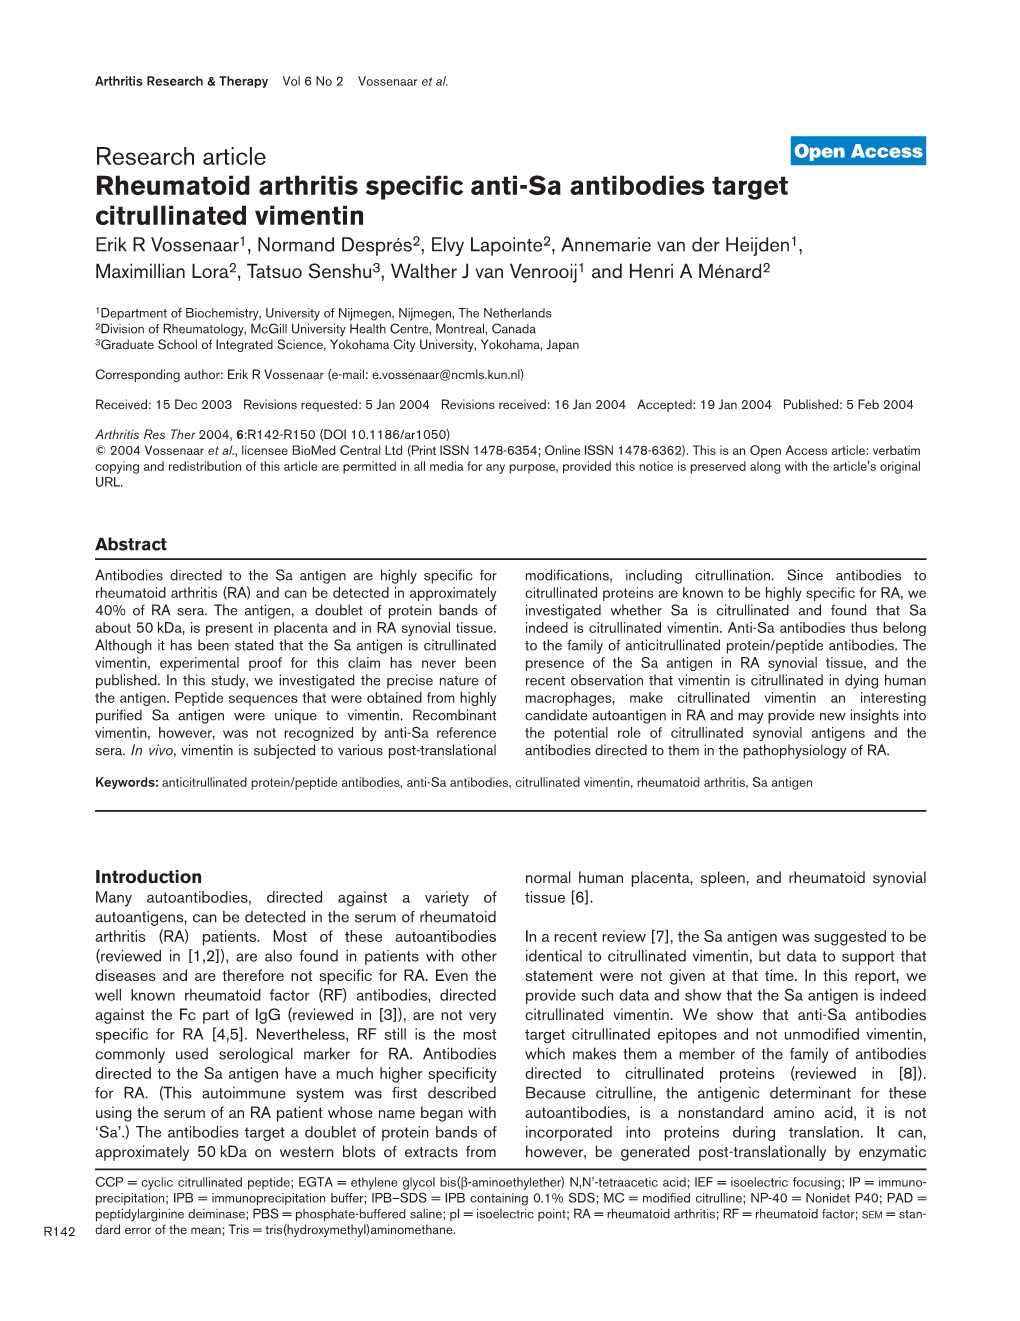 Rheumatoid Arthritis Specific Anti-Sa Antibodies Target Citrullinated Vimentin